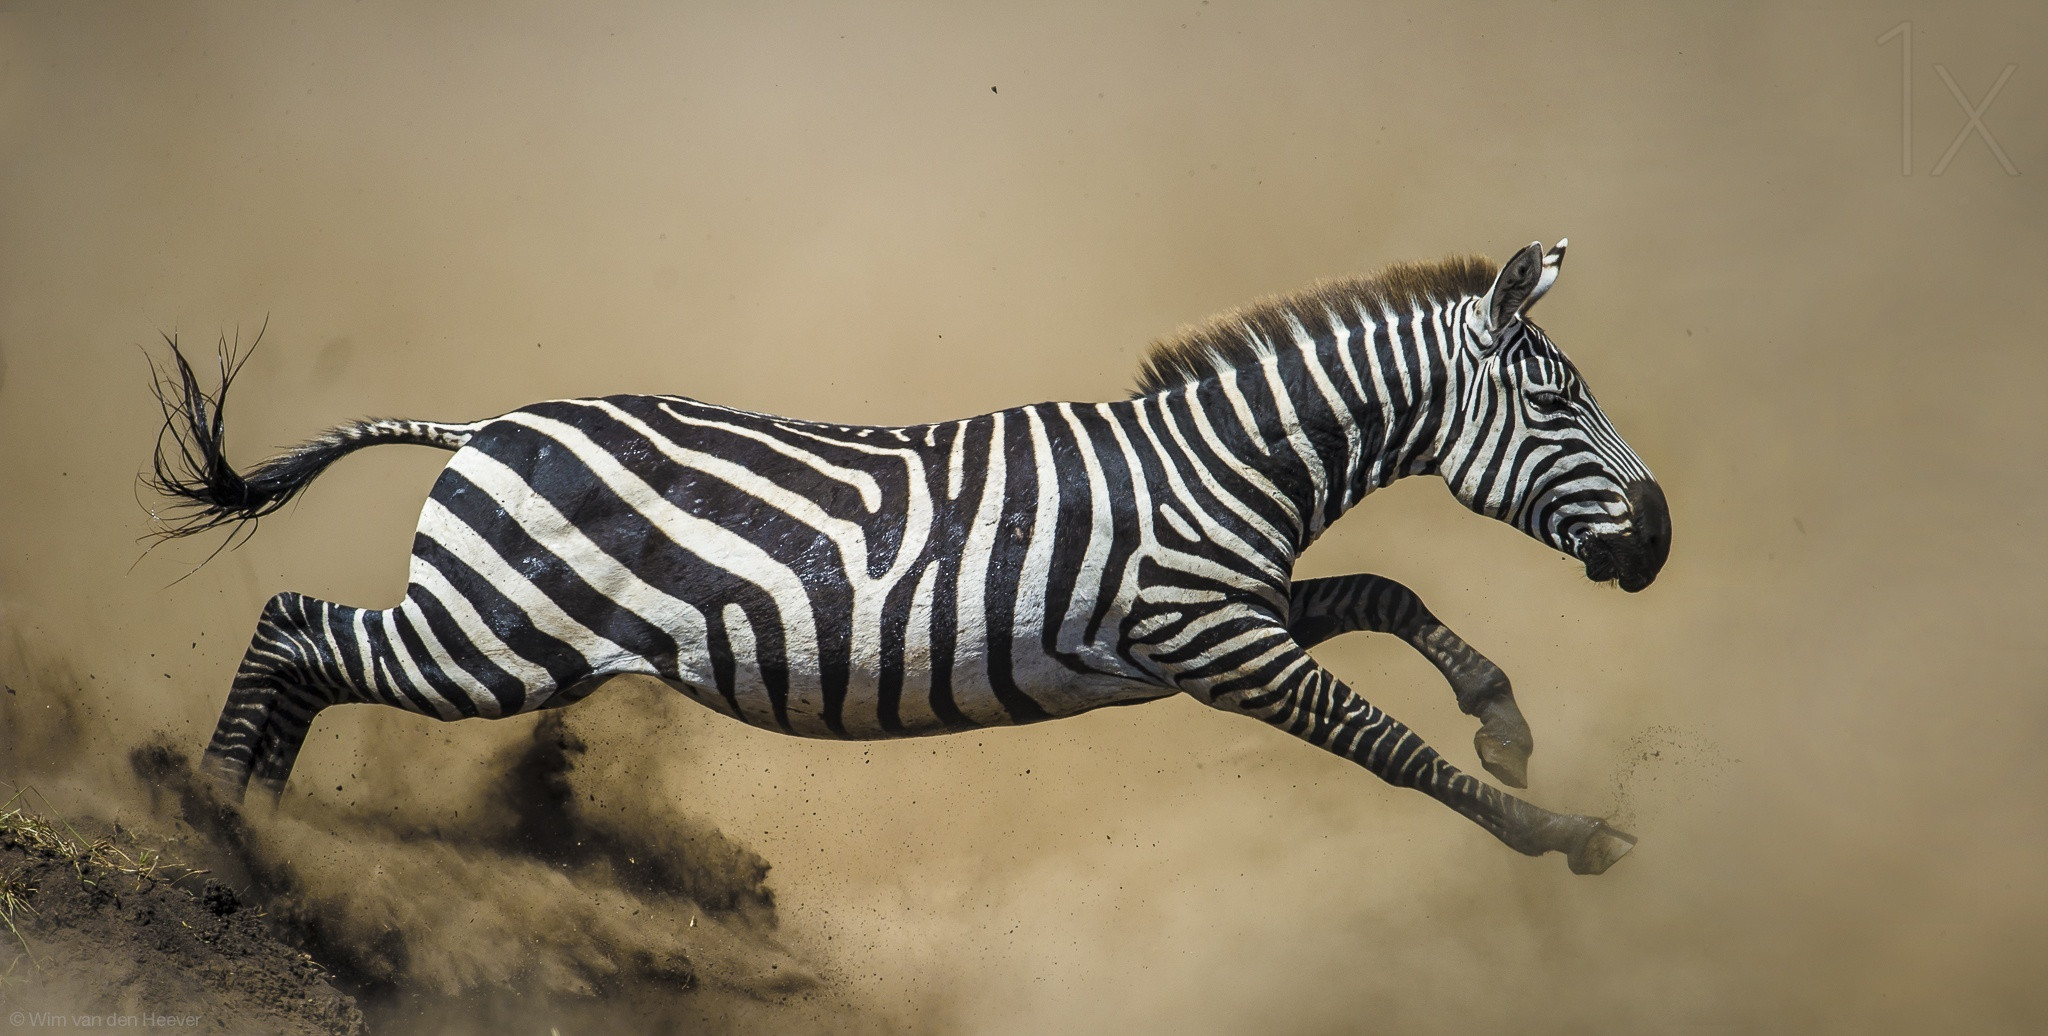 Jumping zebra photo